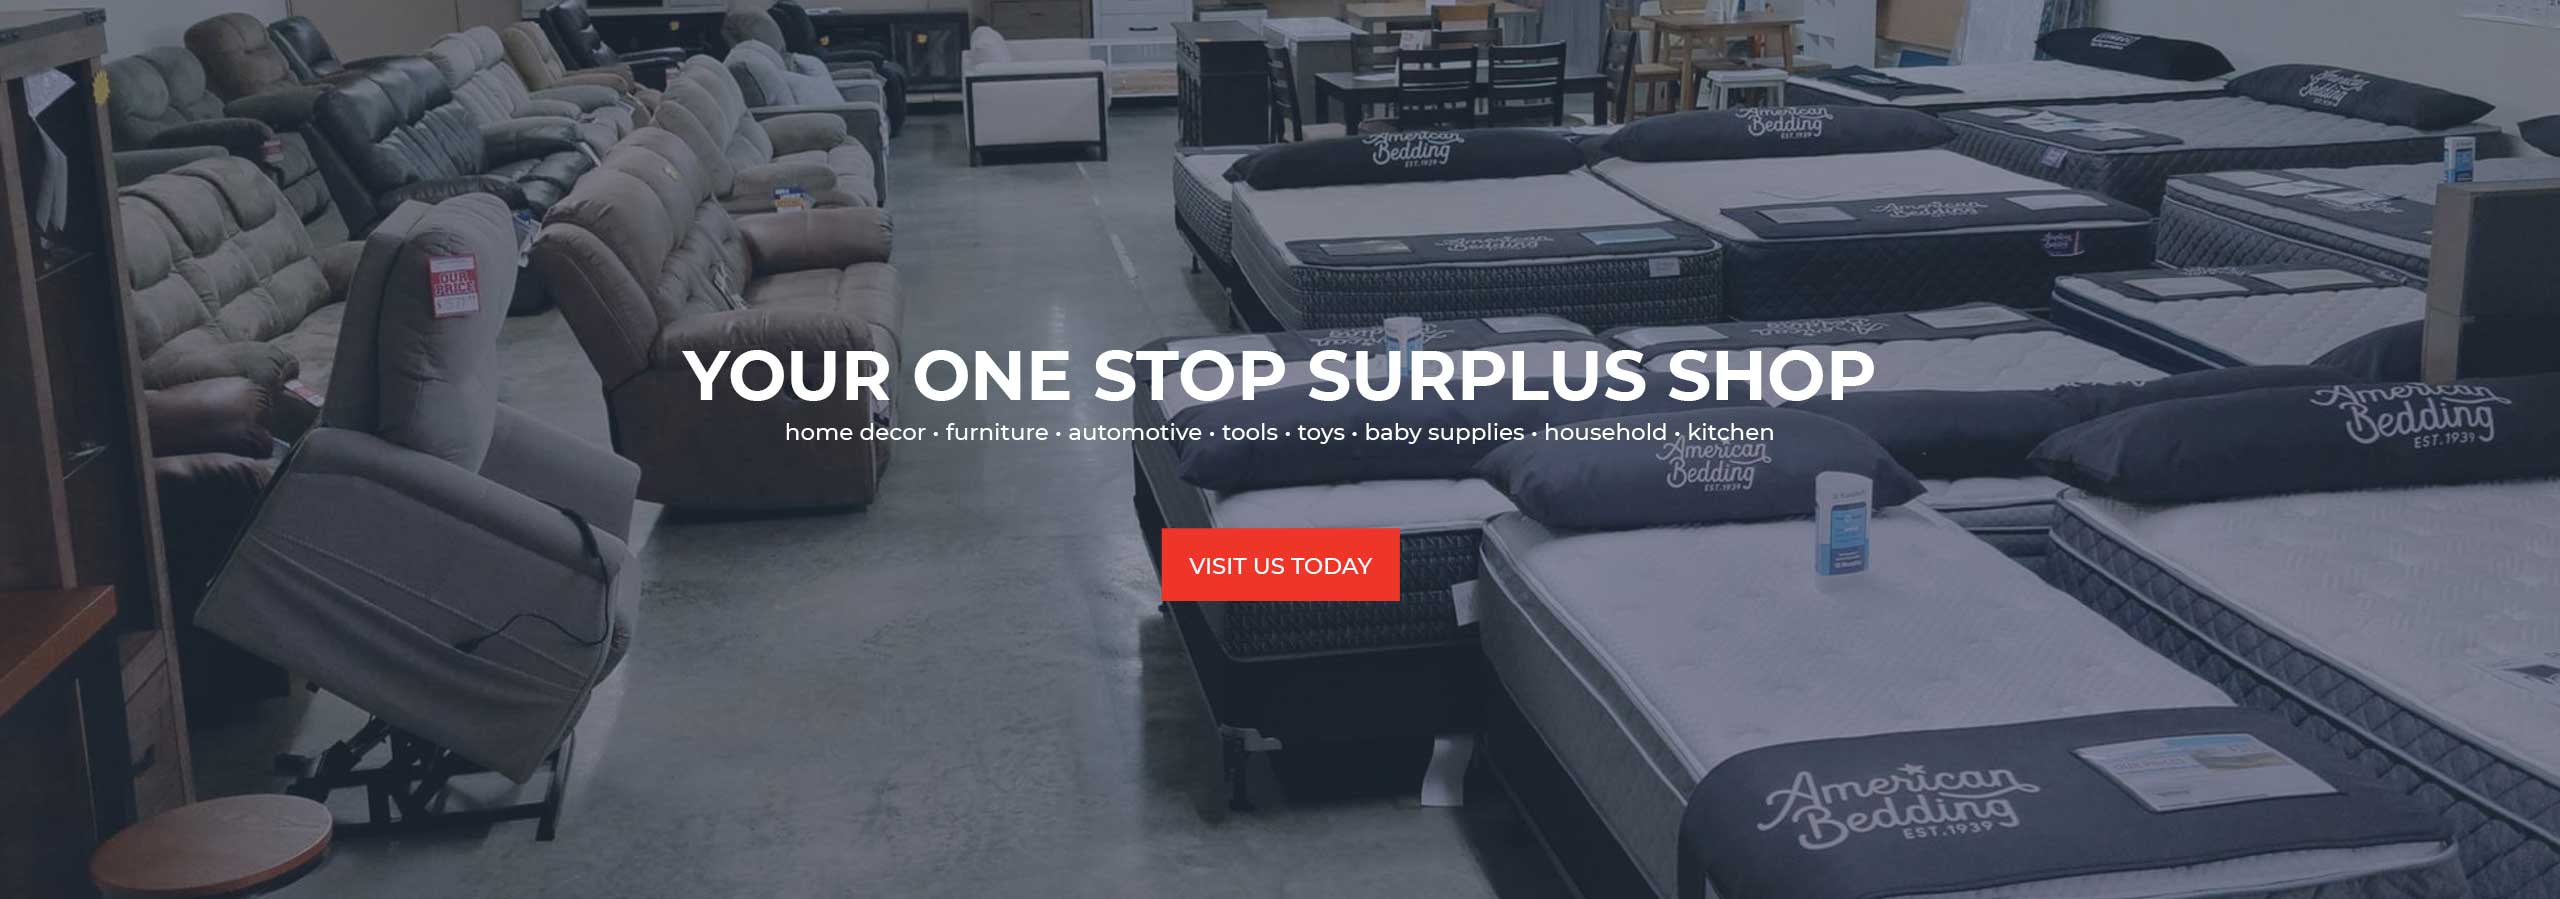 Your One Stop Surplus Shop - Visit Us Today